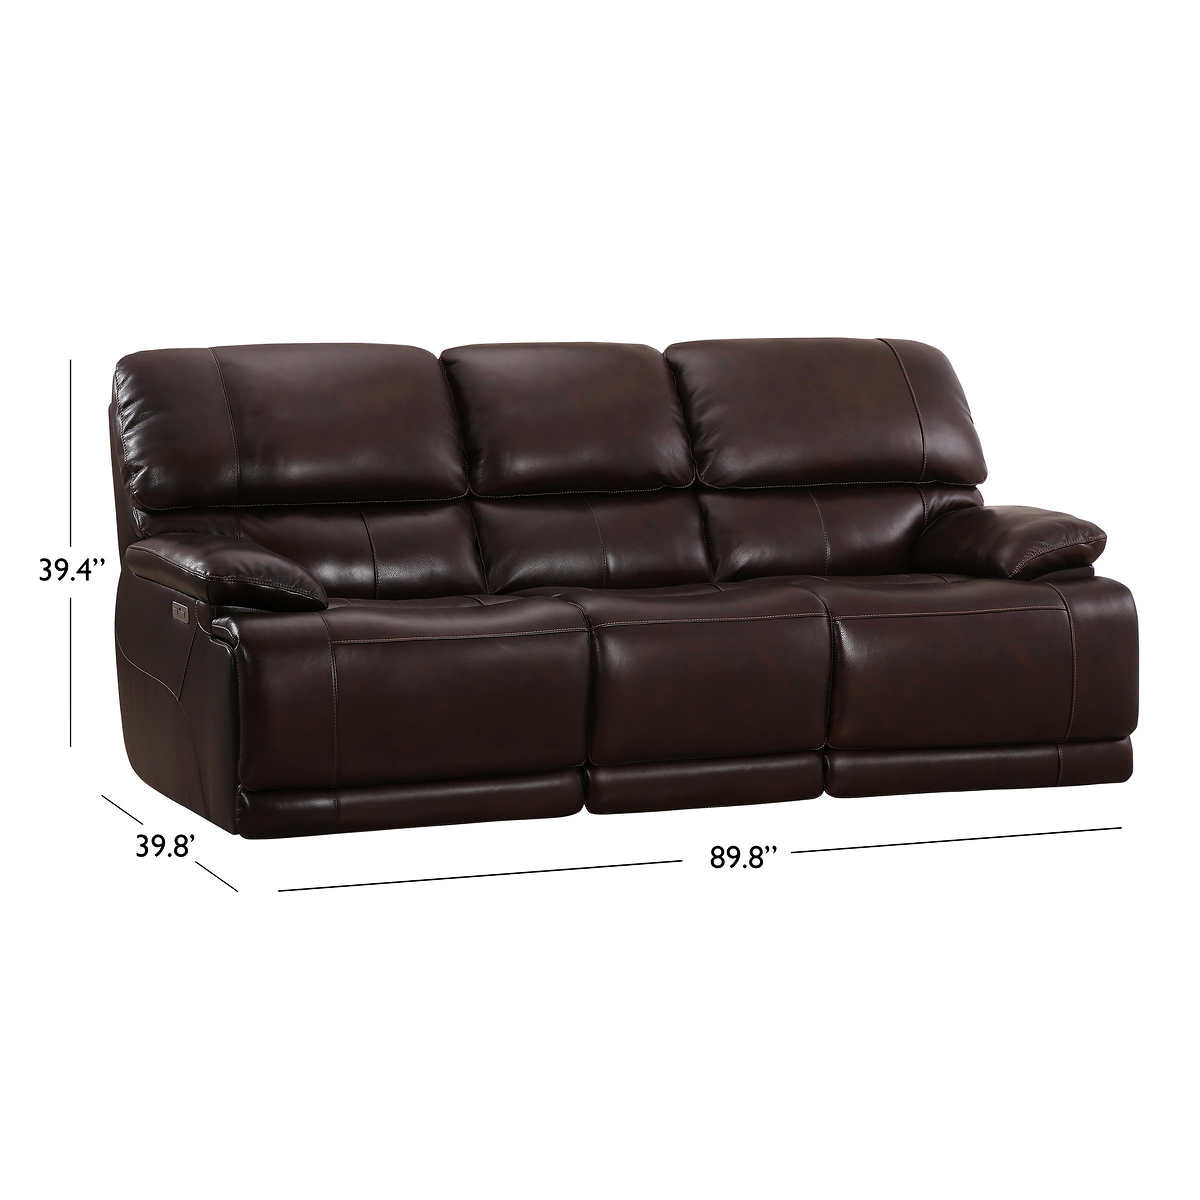 Costco - Aleena Leather Power Reclining Sofa with Power Headrest - Retail $999